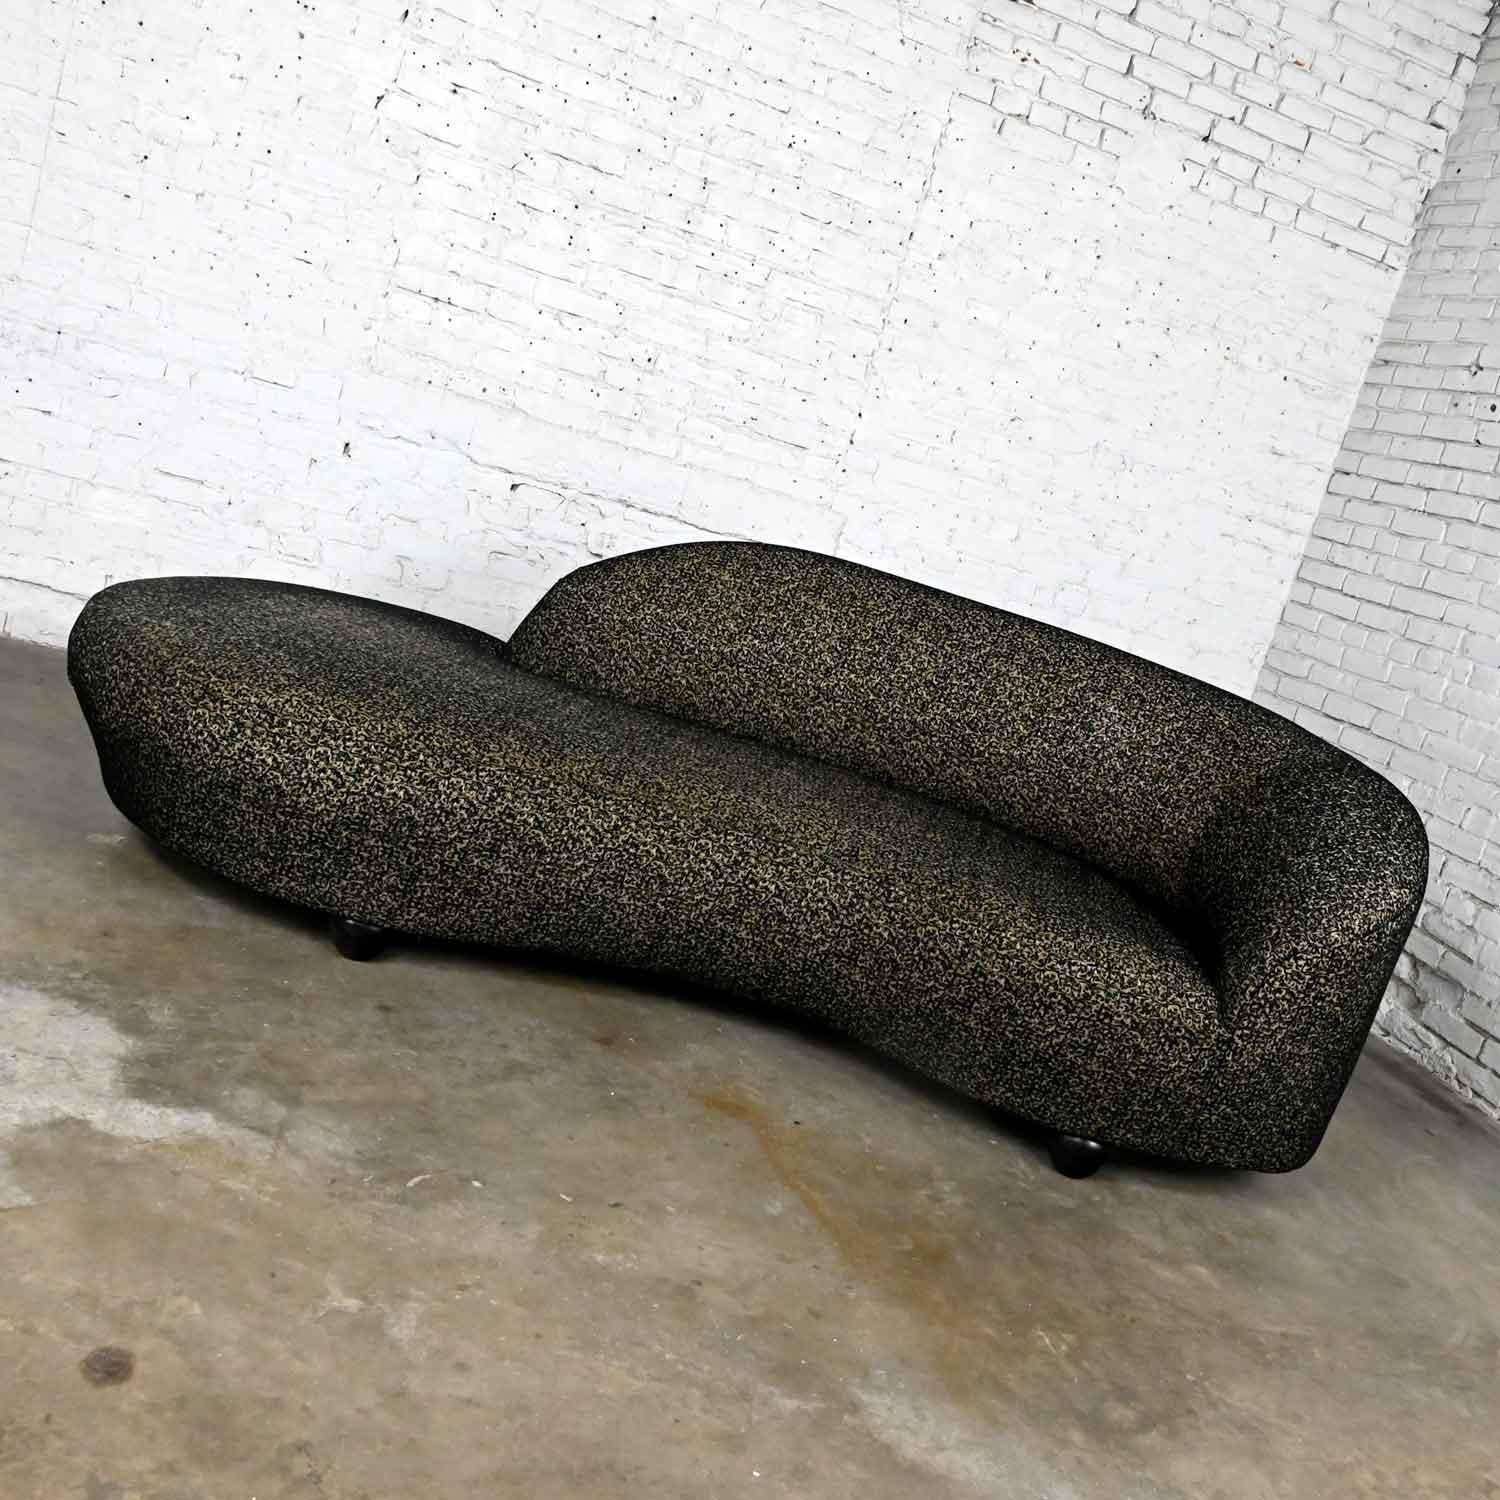 Postmodern Black & Khaki Sort of Animal Print Serpentine Cloud-Like Chaise Sofa For Sale 8